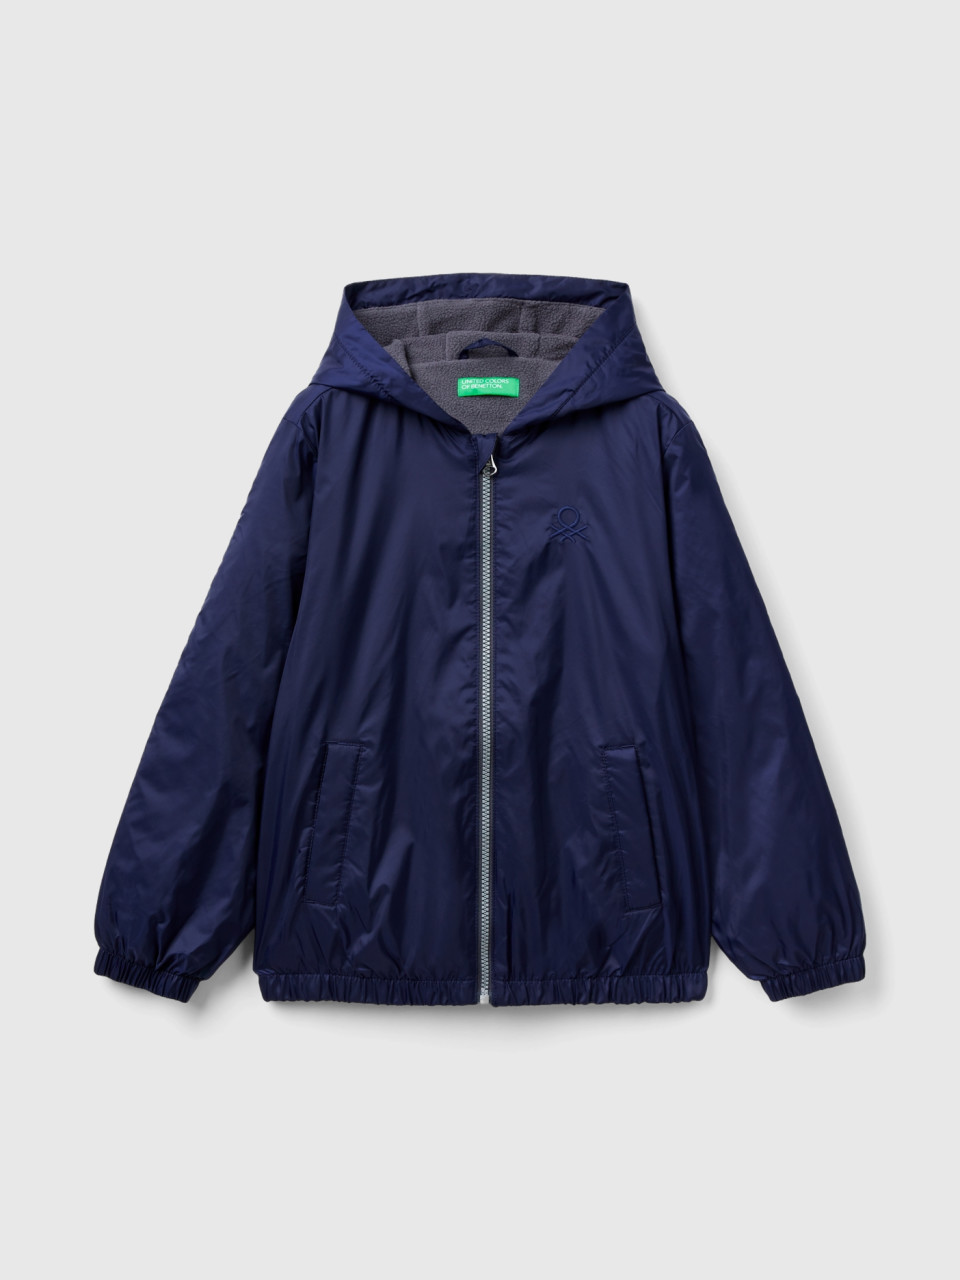 Benetton, Nylon Jacket With Zip And Hood, Dark Blue, Kids